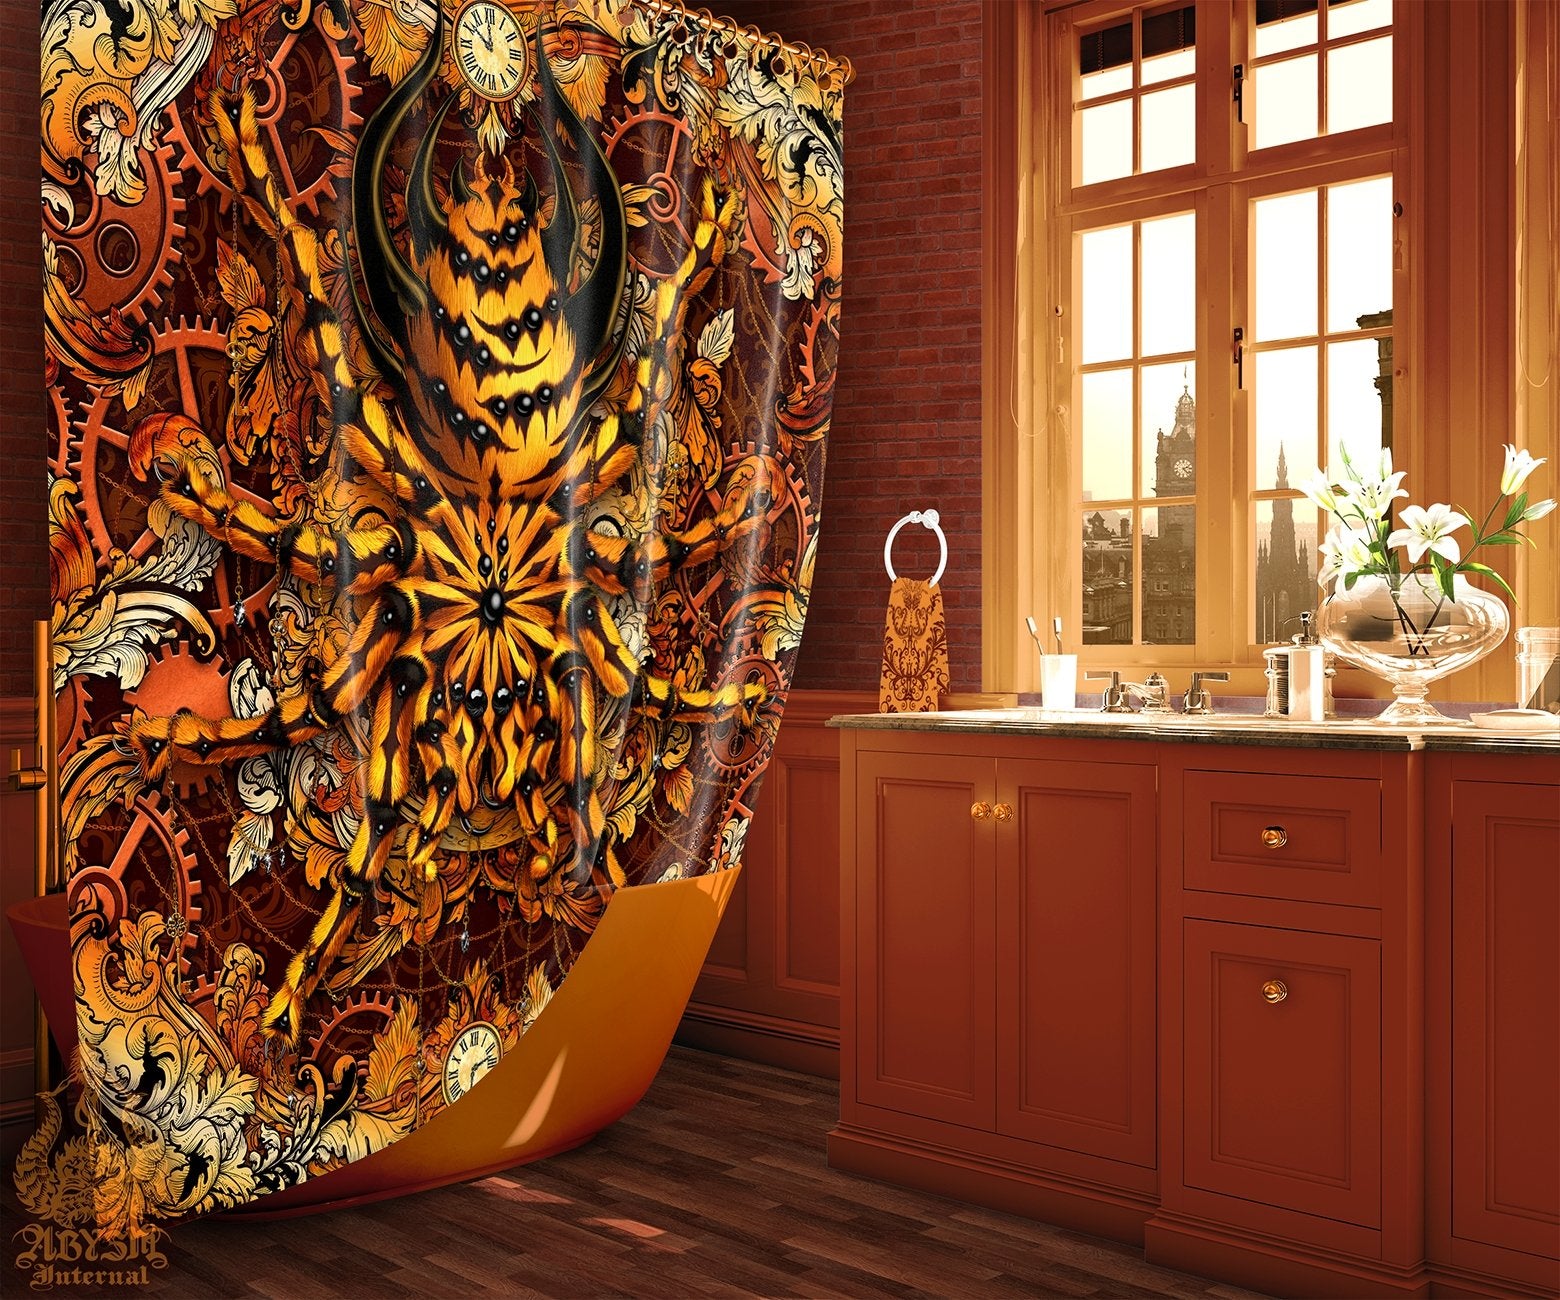 Steampunk Shower Curtain, Baroque Bathroom Decor, Alternative Home - Spider, Tarantula Art - Abysm Internal